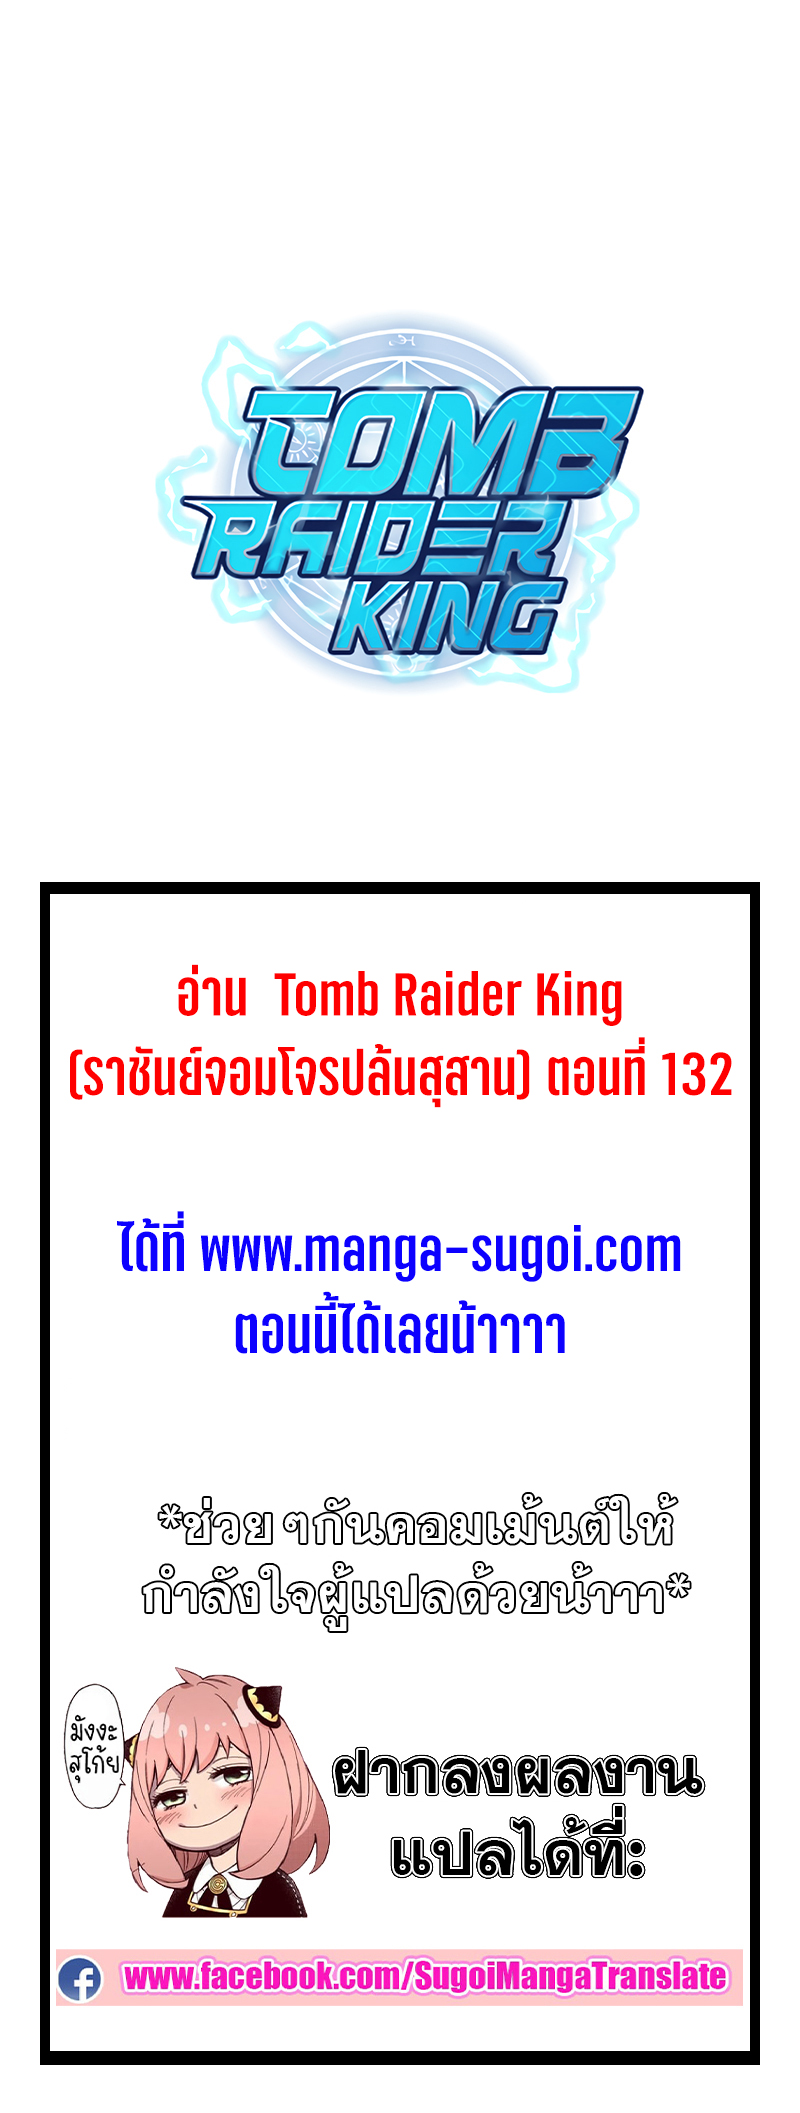 tomb raider king 131 18